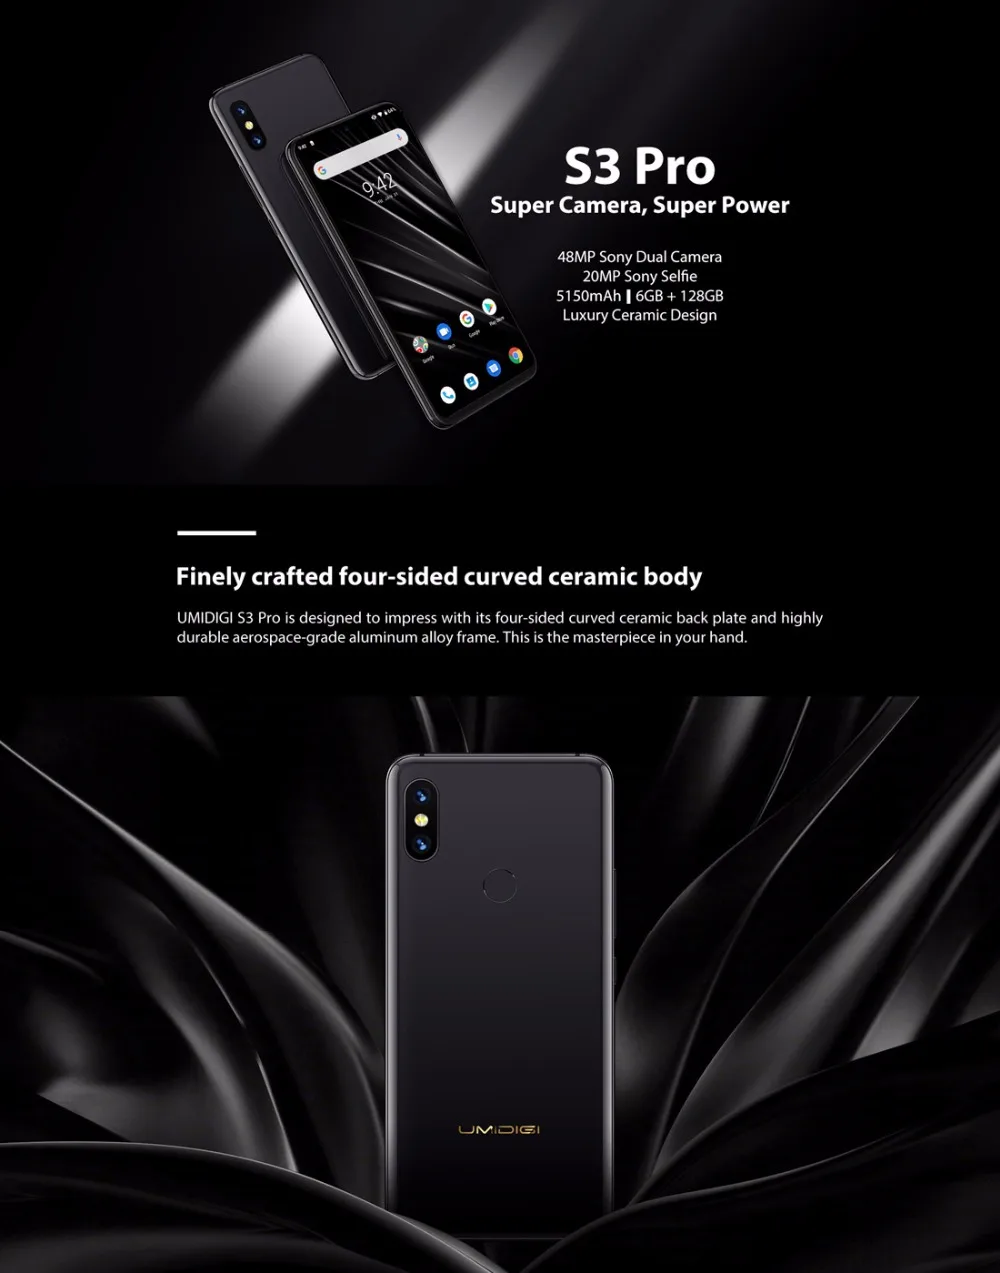 UMIDIGI S3 PRO Android 9,0, 48 Мп+ 12 Мп+ 20 МП, супер камера, 5150 мА/ч, большая мощность, 128 ГБ, 6 ГБ, 6,3 дюйма, FHD+ NFC, керамический смартфон с широкими диапазонами